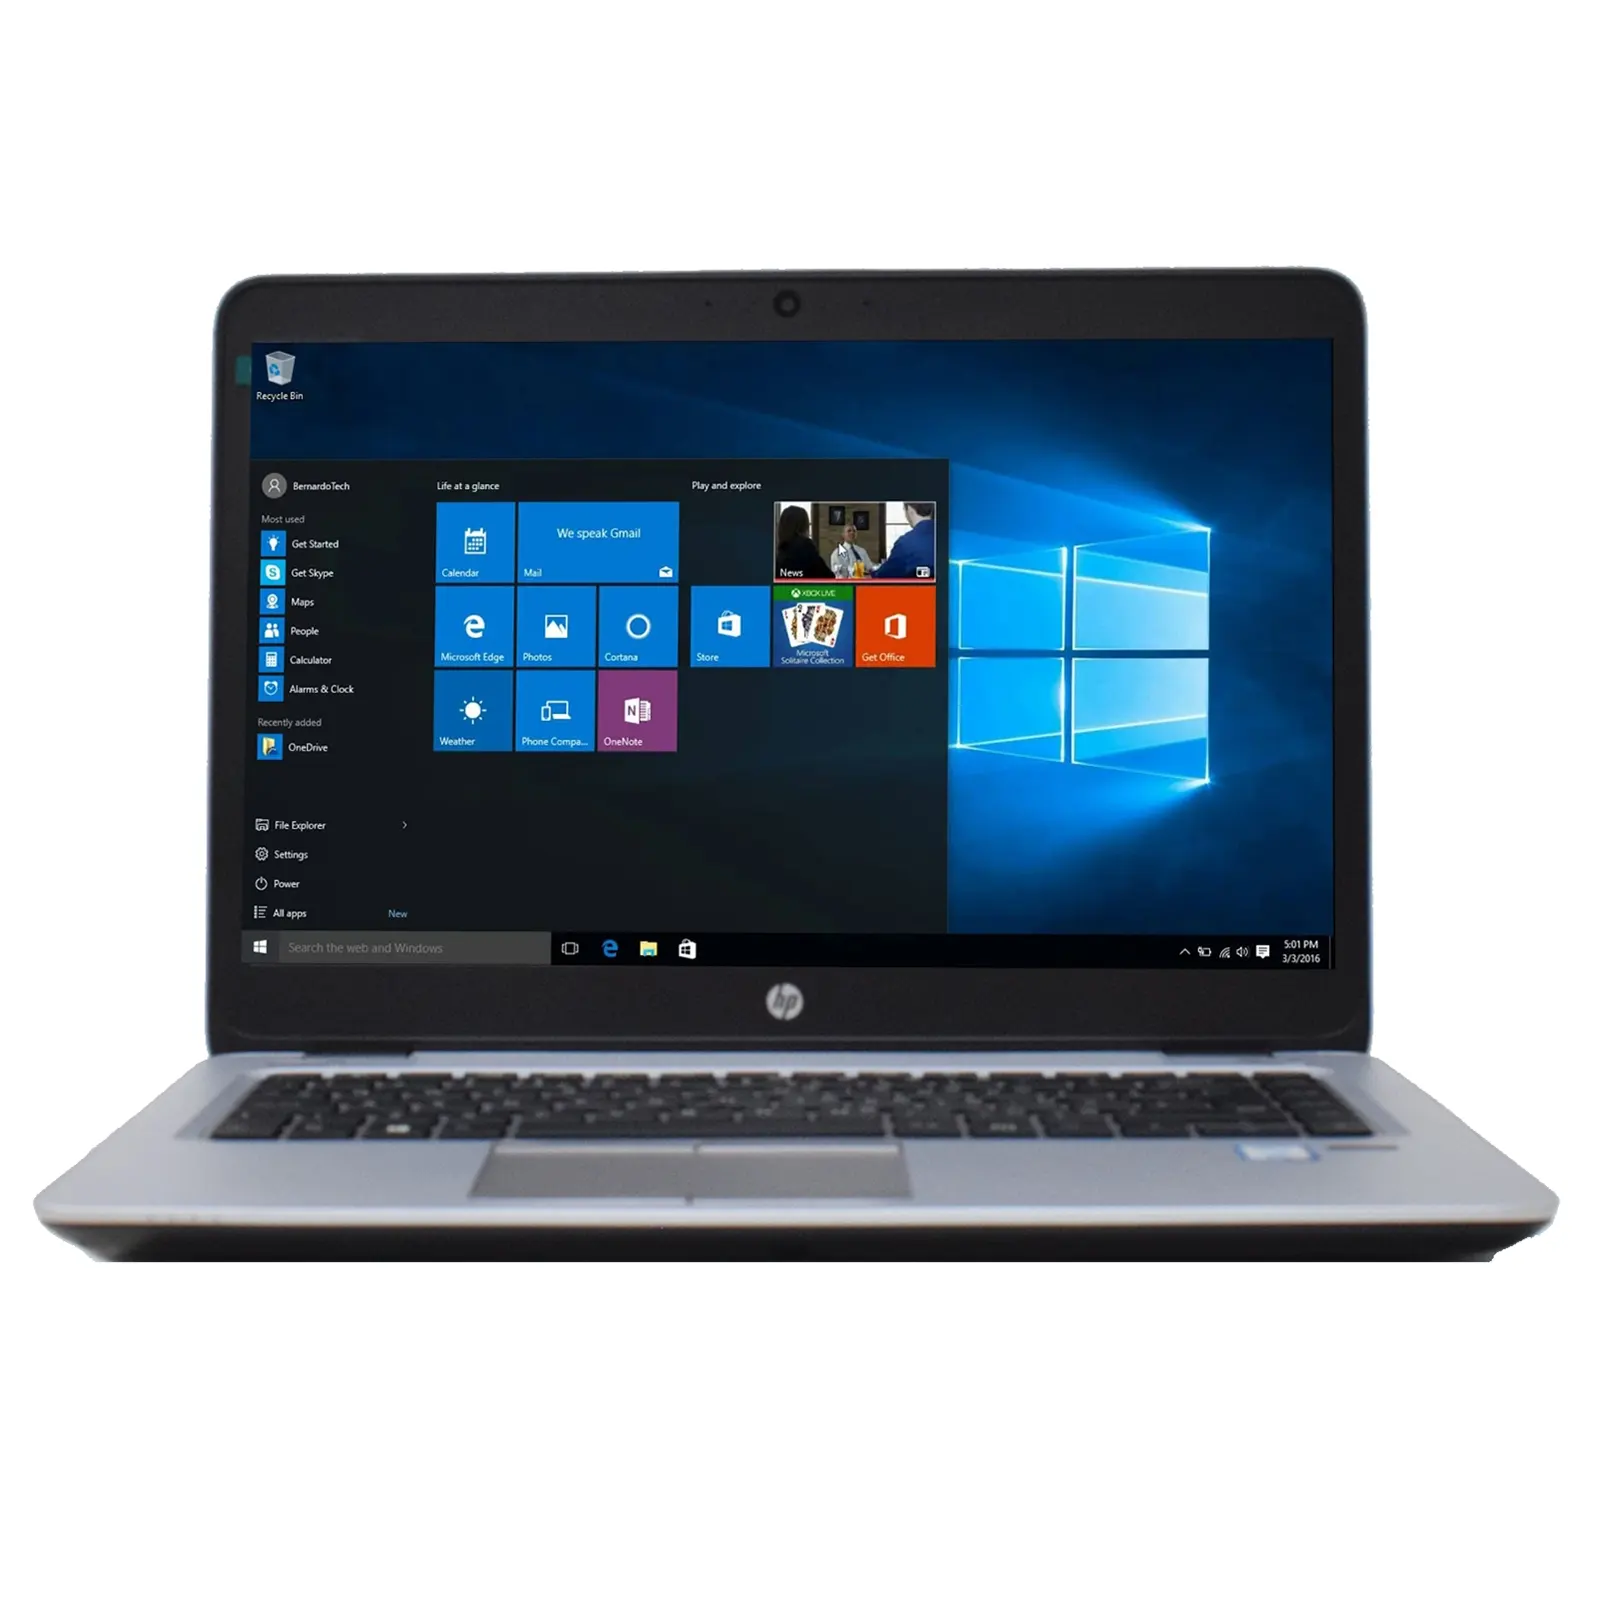 PREMIUM REFURBISHED HP EliteBook 840 G3 Intel Core i7-6500U 6th Gen Laptop, 14 Inch Full HD 1080p Screen, 8GB RAM, 256GB SSD, Windows 10 Pro